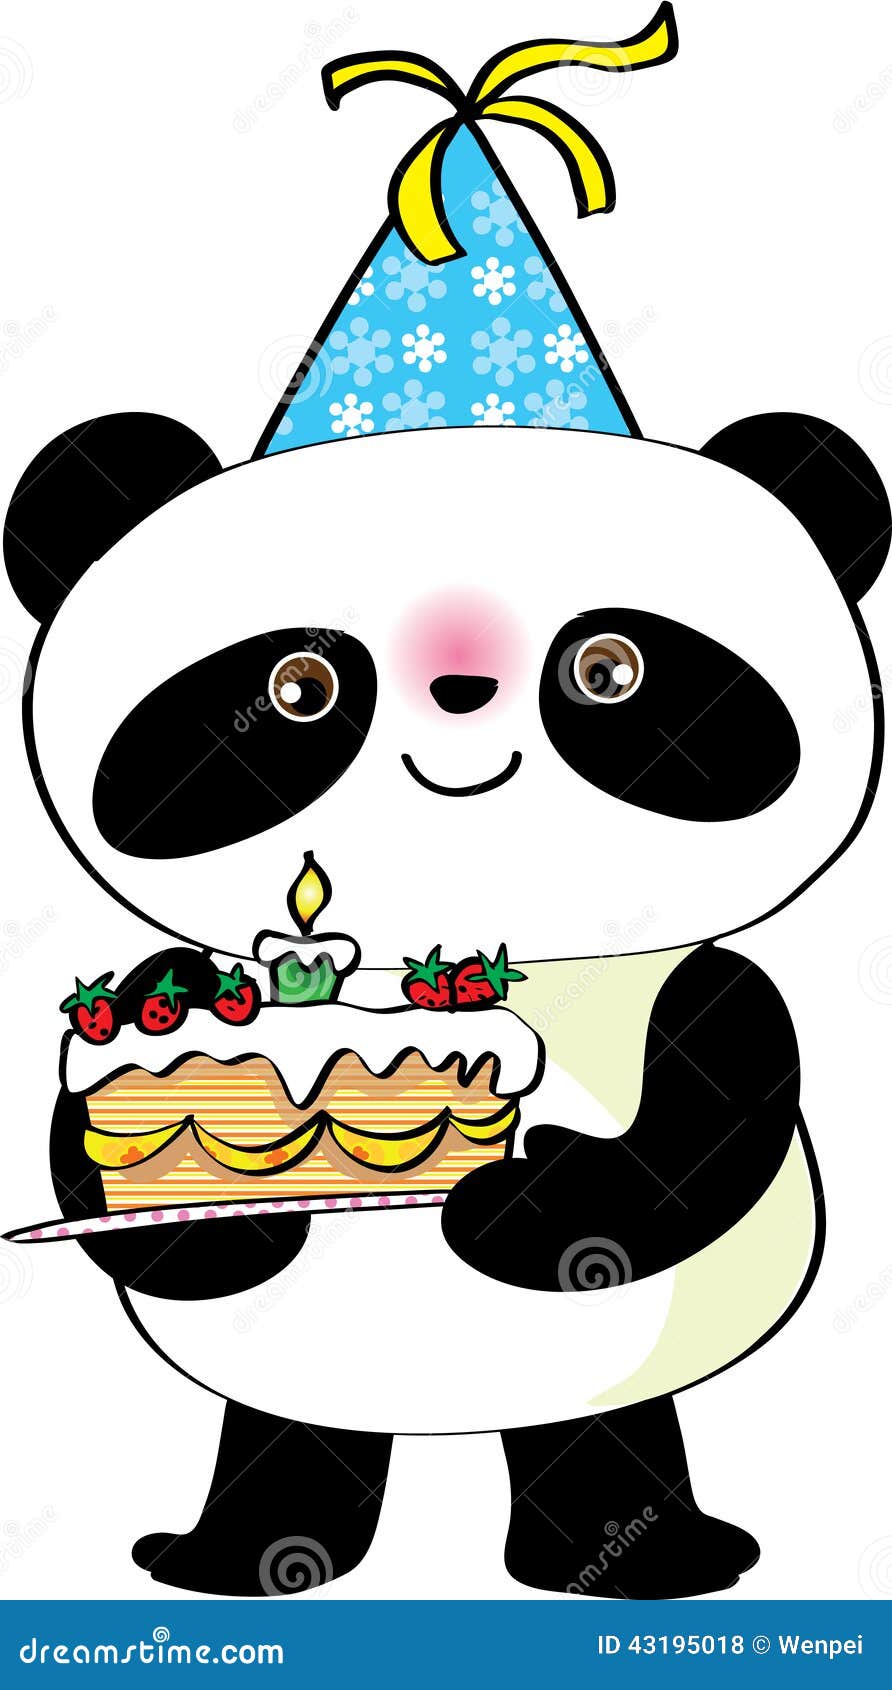 clipart panda cake - photo #21